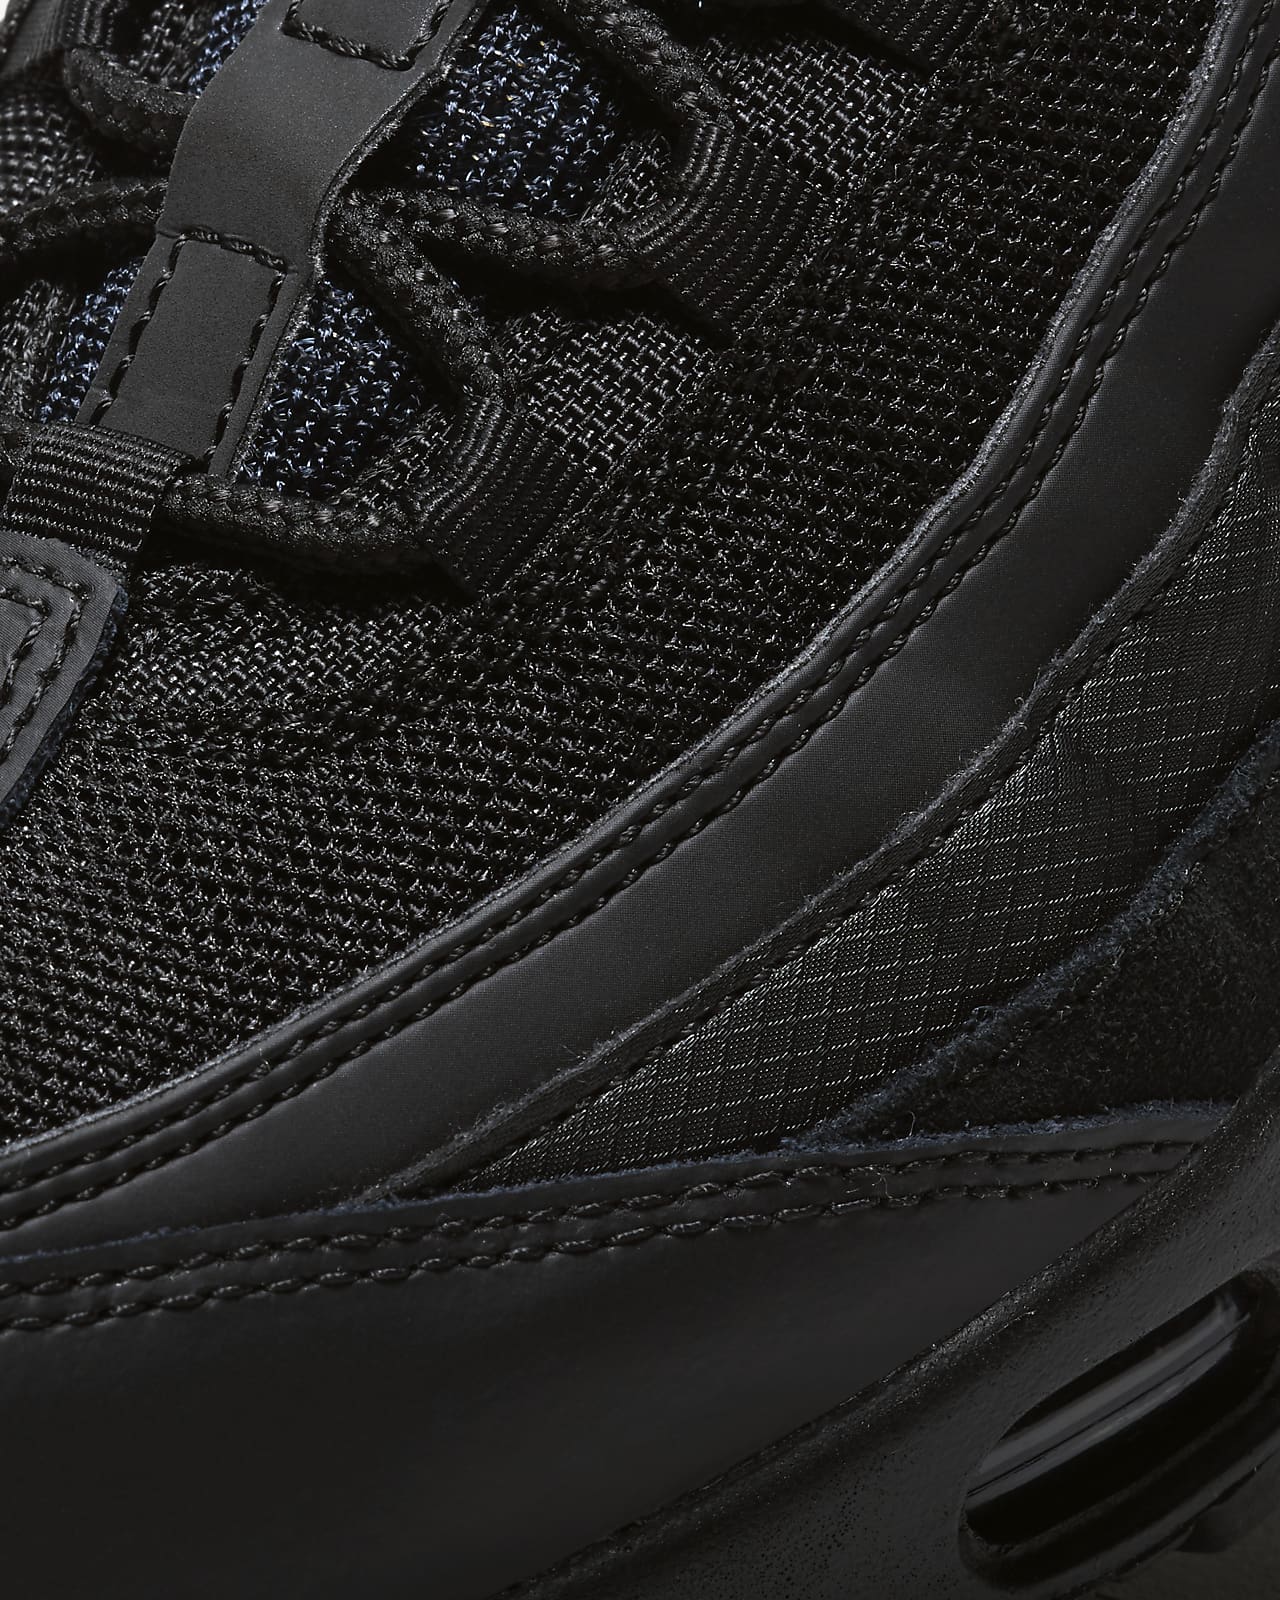 Nike Air Max 95 - Triple Black